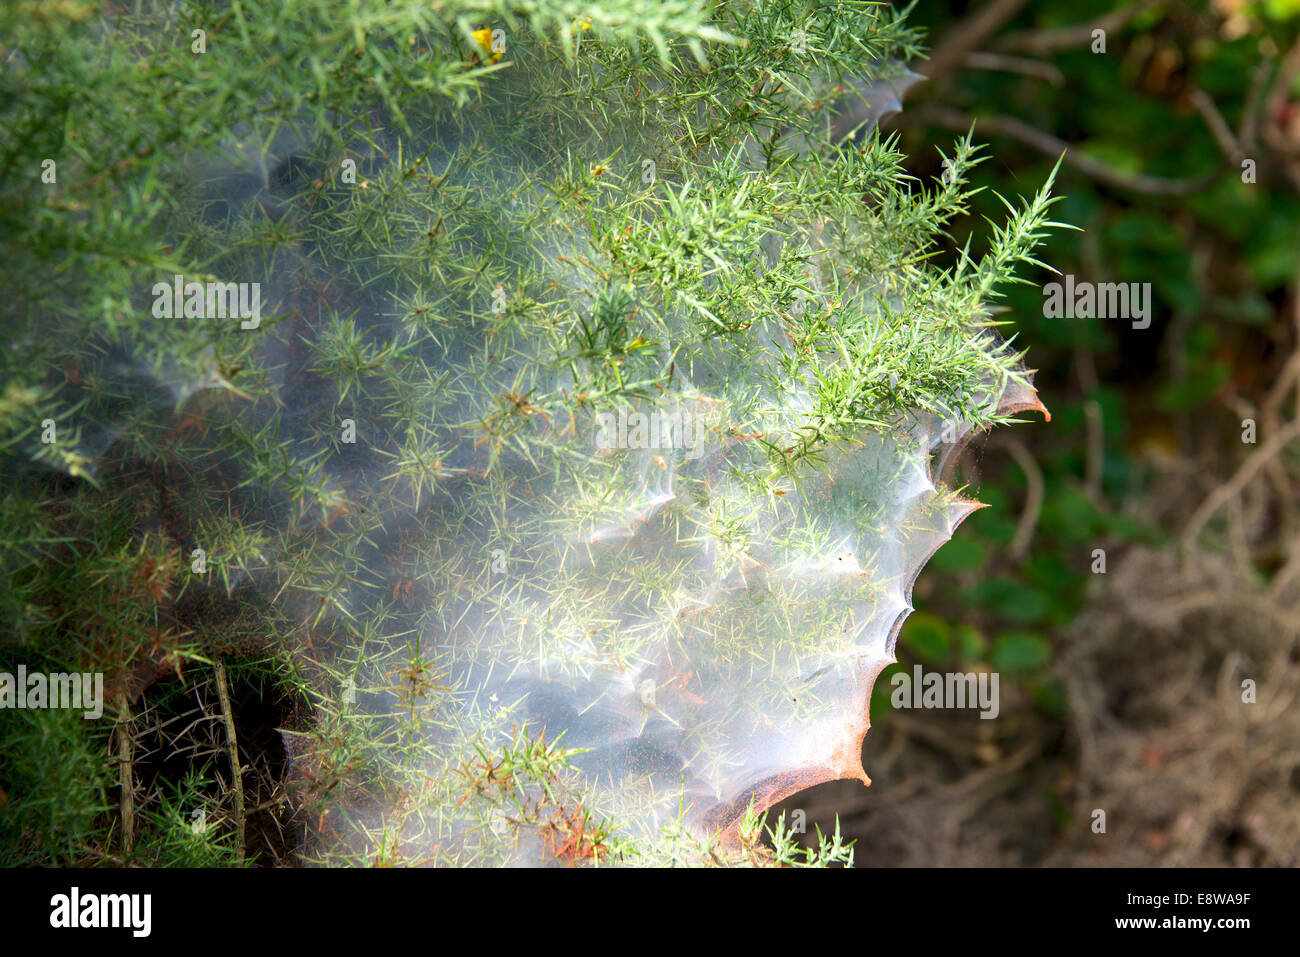 Gorse Spider Mite Red Spider Mite Tetranychus lintearius Biological control agent on Ulex europaeus (Gorse) Stock Photo